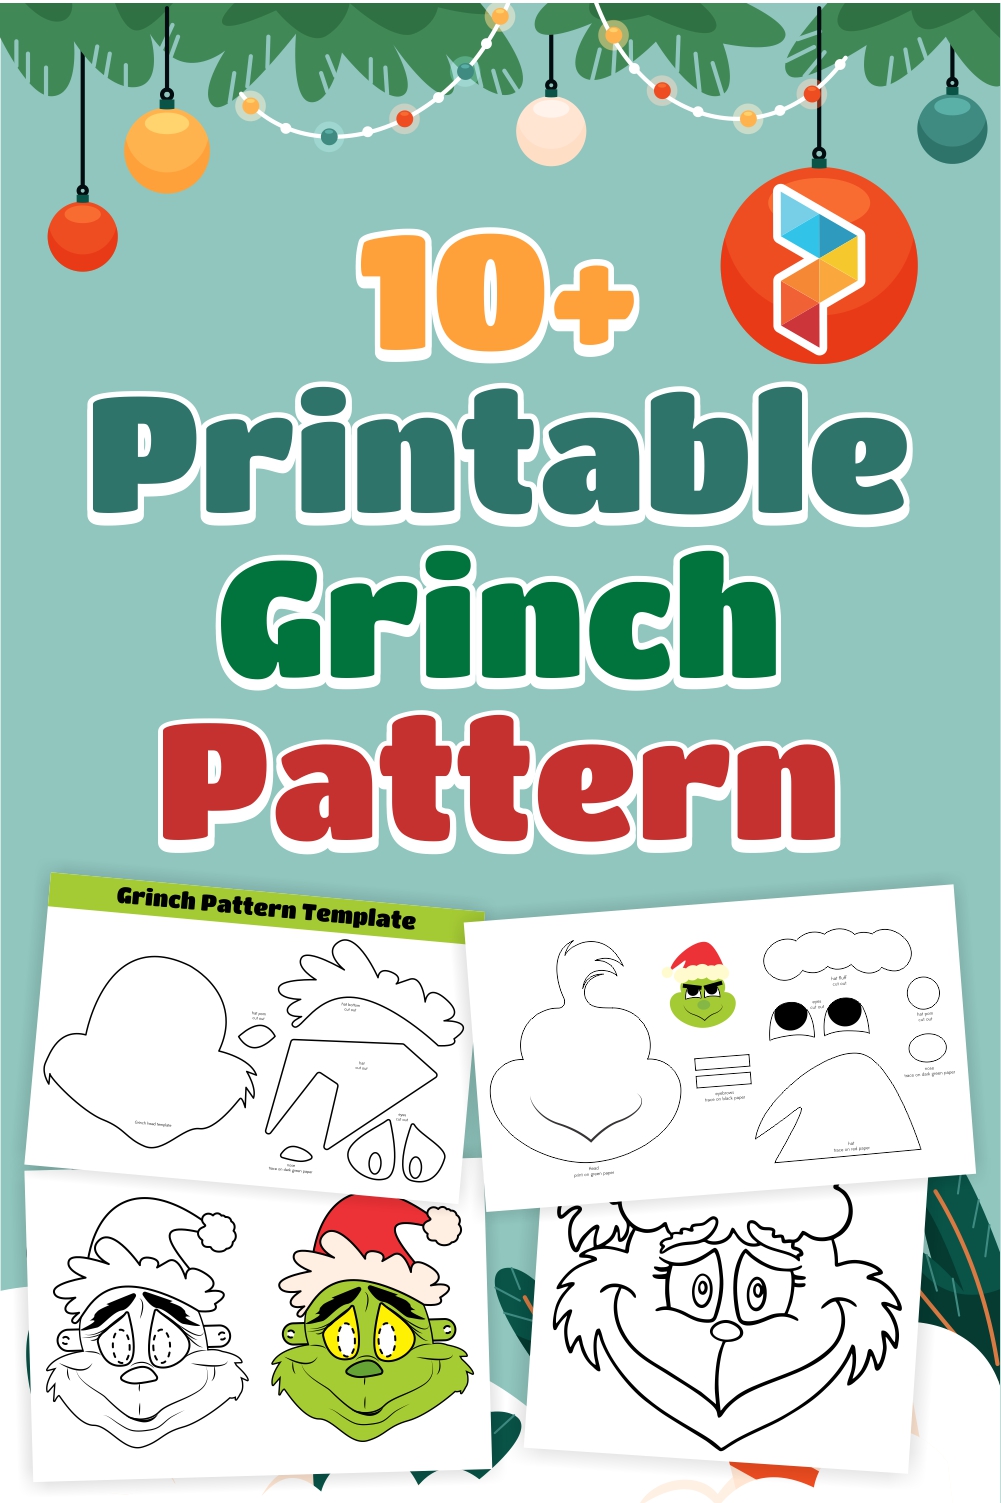 Grinch Pattern